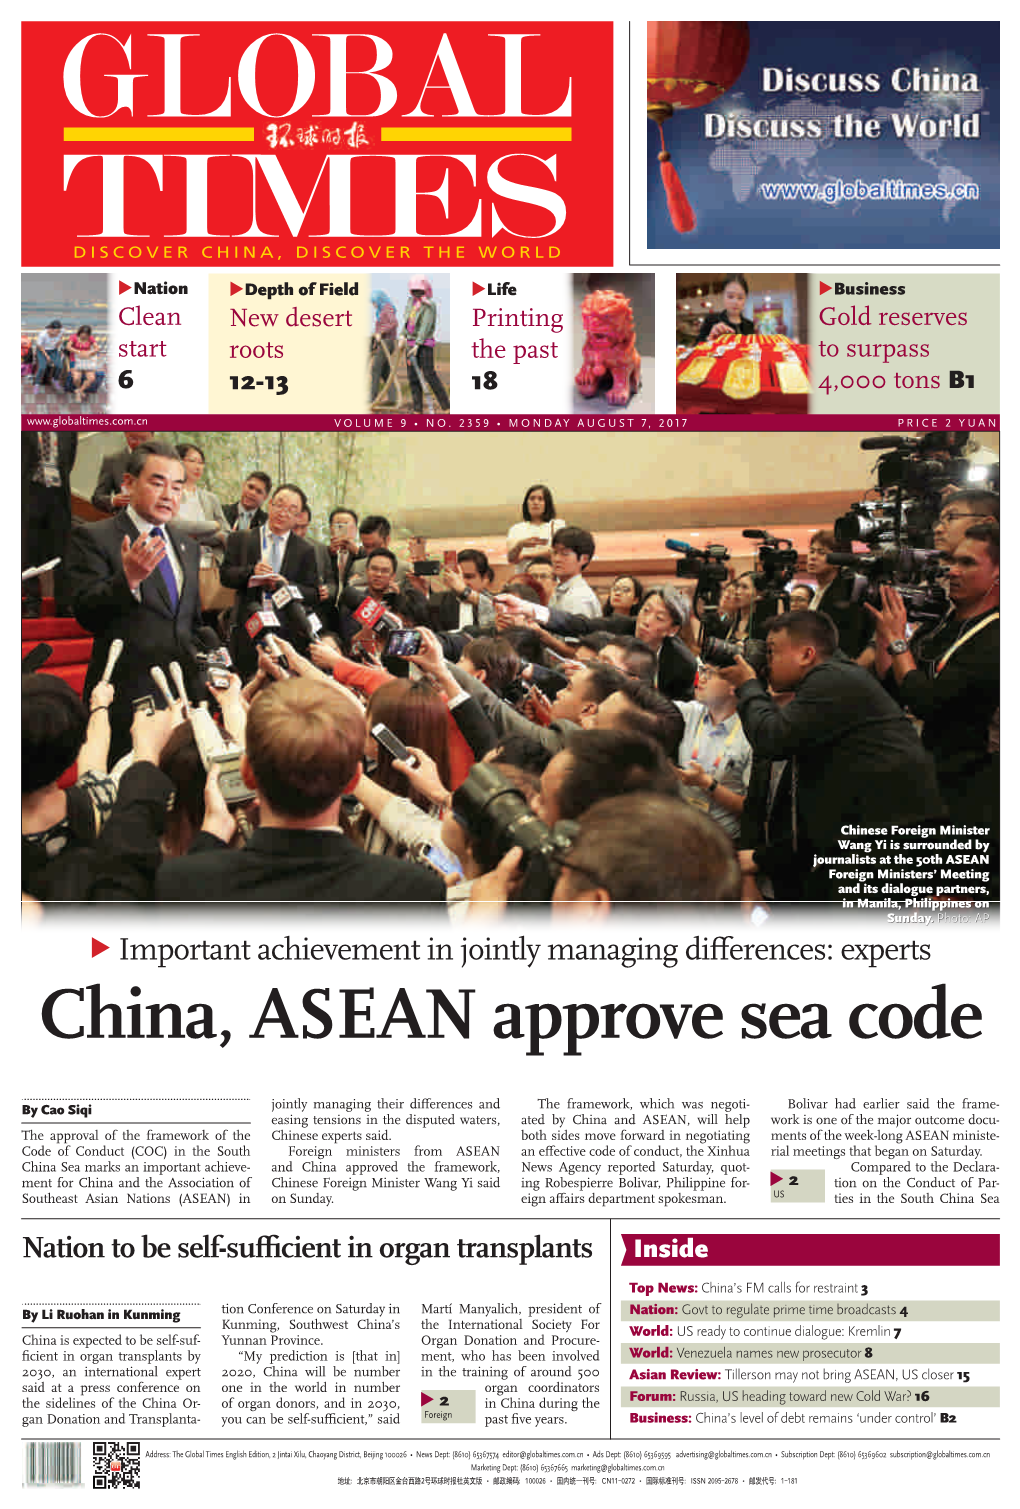 China, ASEAN Approve Sea Code